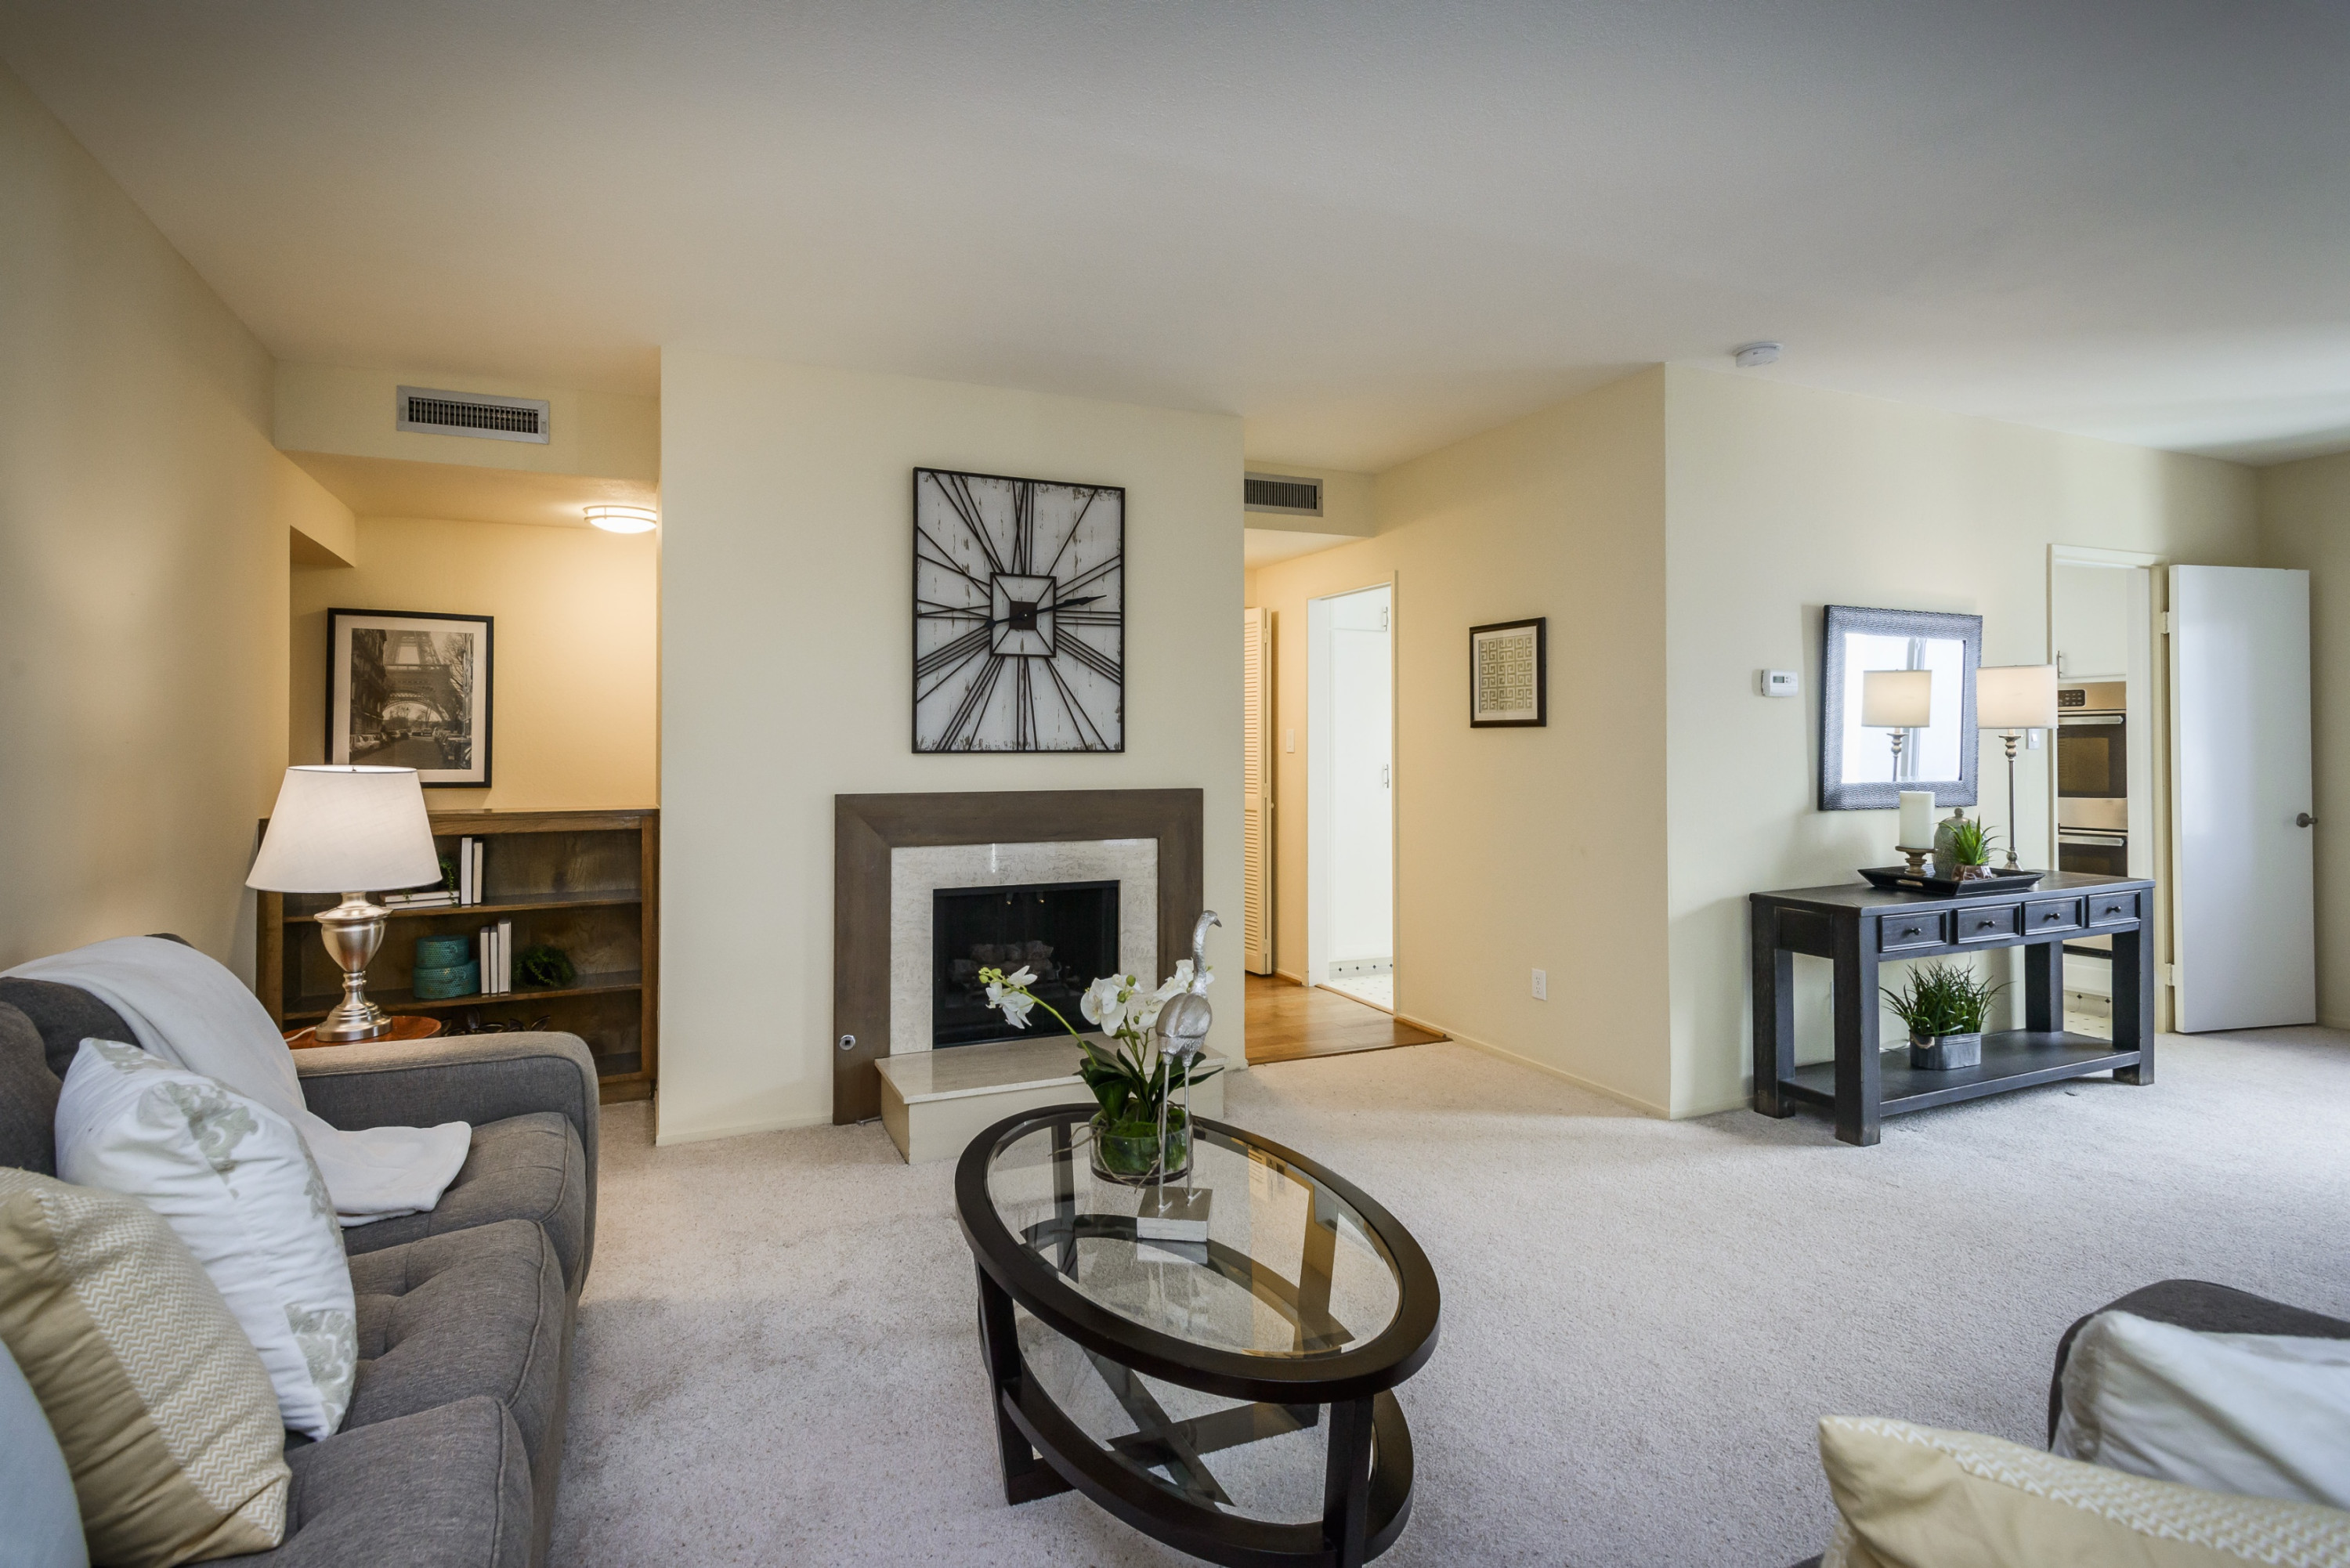 225 Virginia Avenue #3D Living Room Fireplace in Baywood Neighborhood in San Mateo.